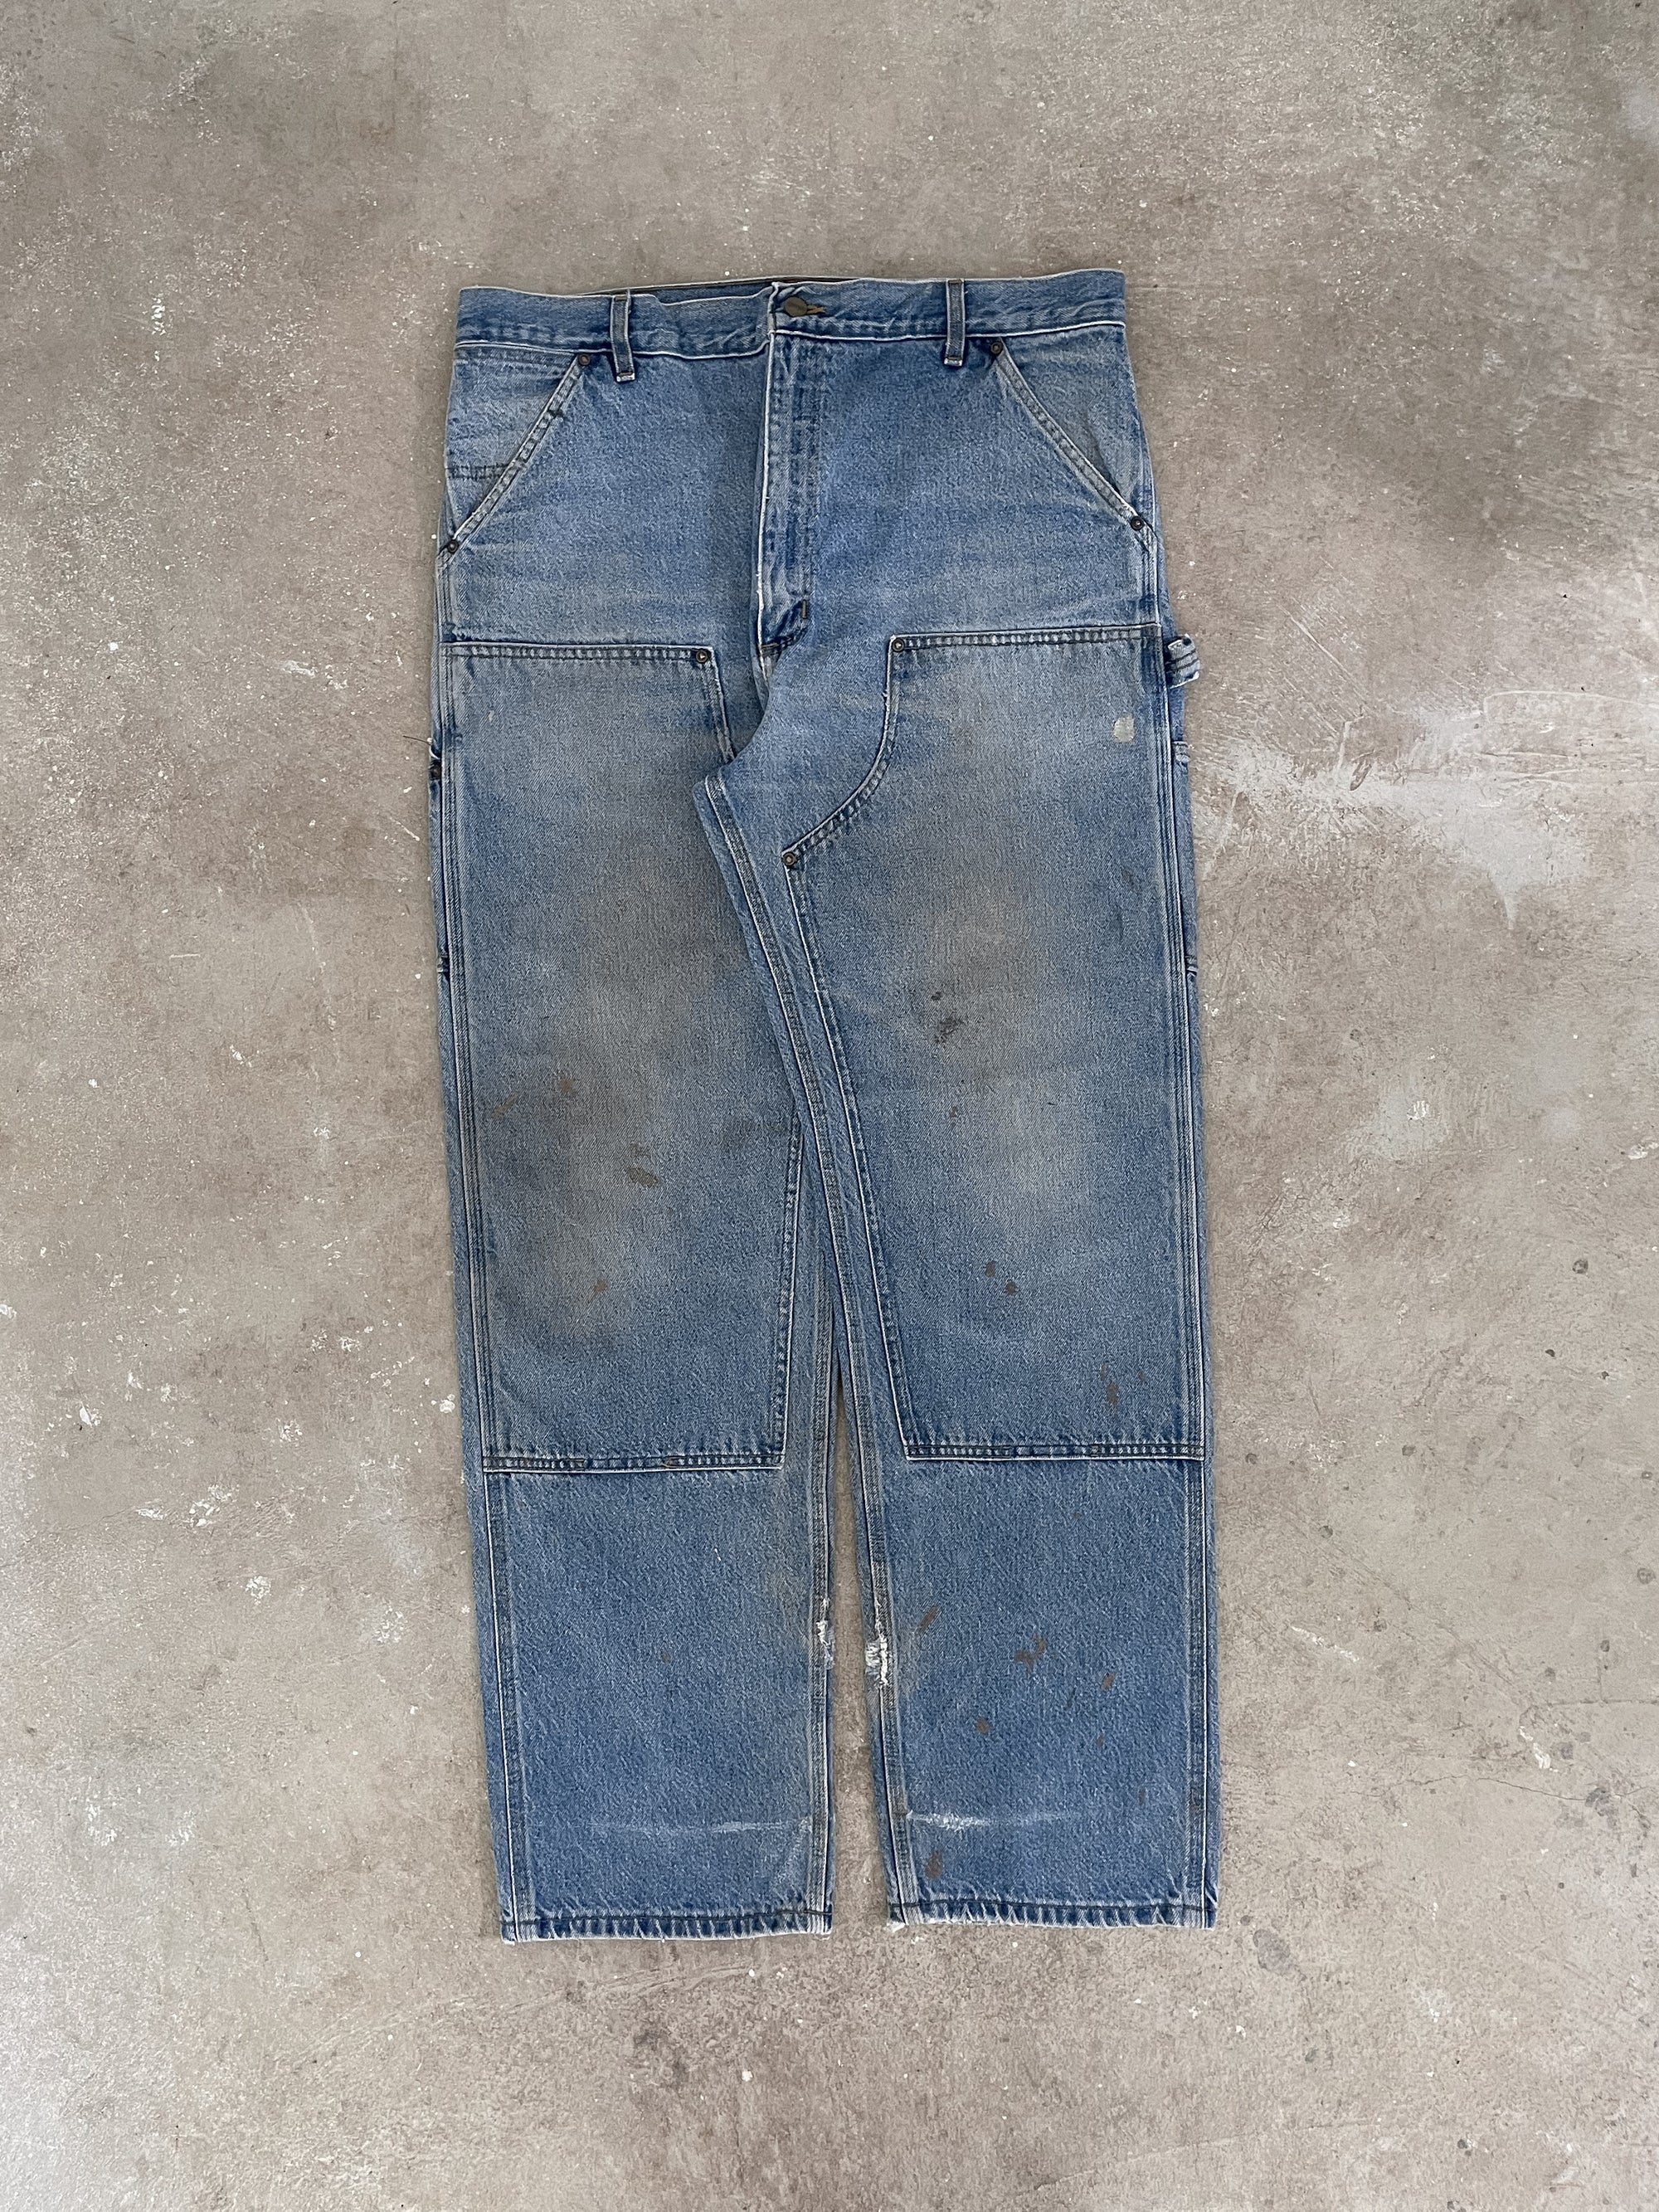 1990s/00s Carhartt B73 Blue Denim Double Knee Work Pants (37X34)